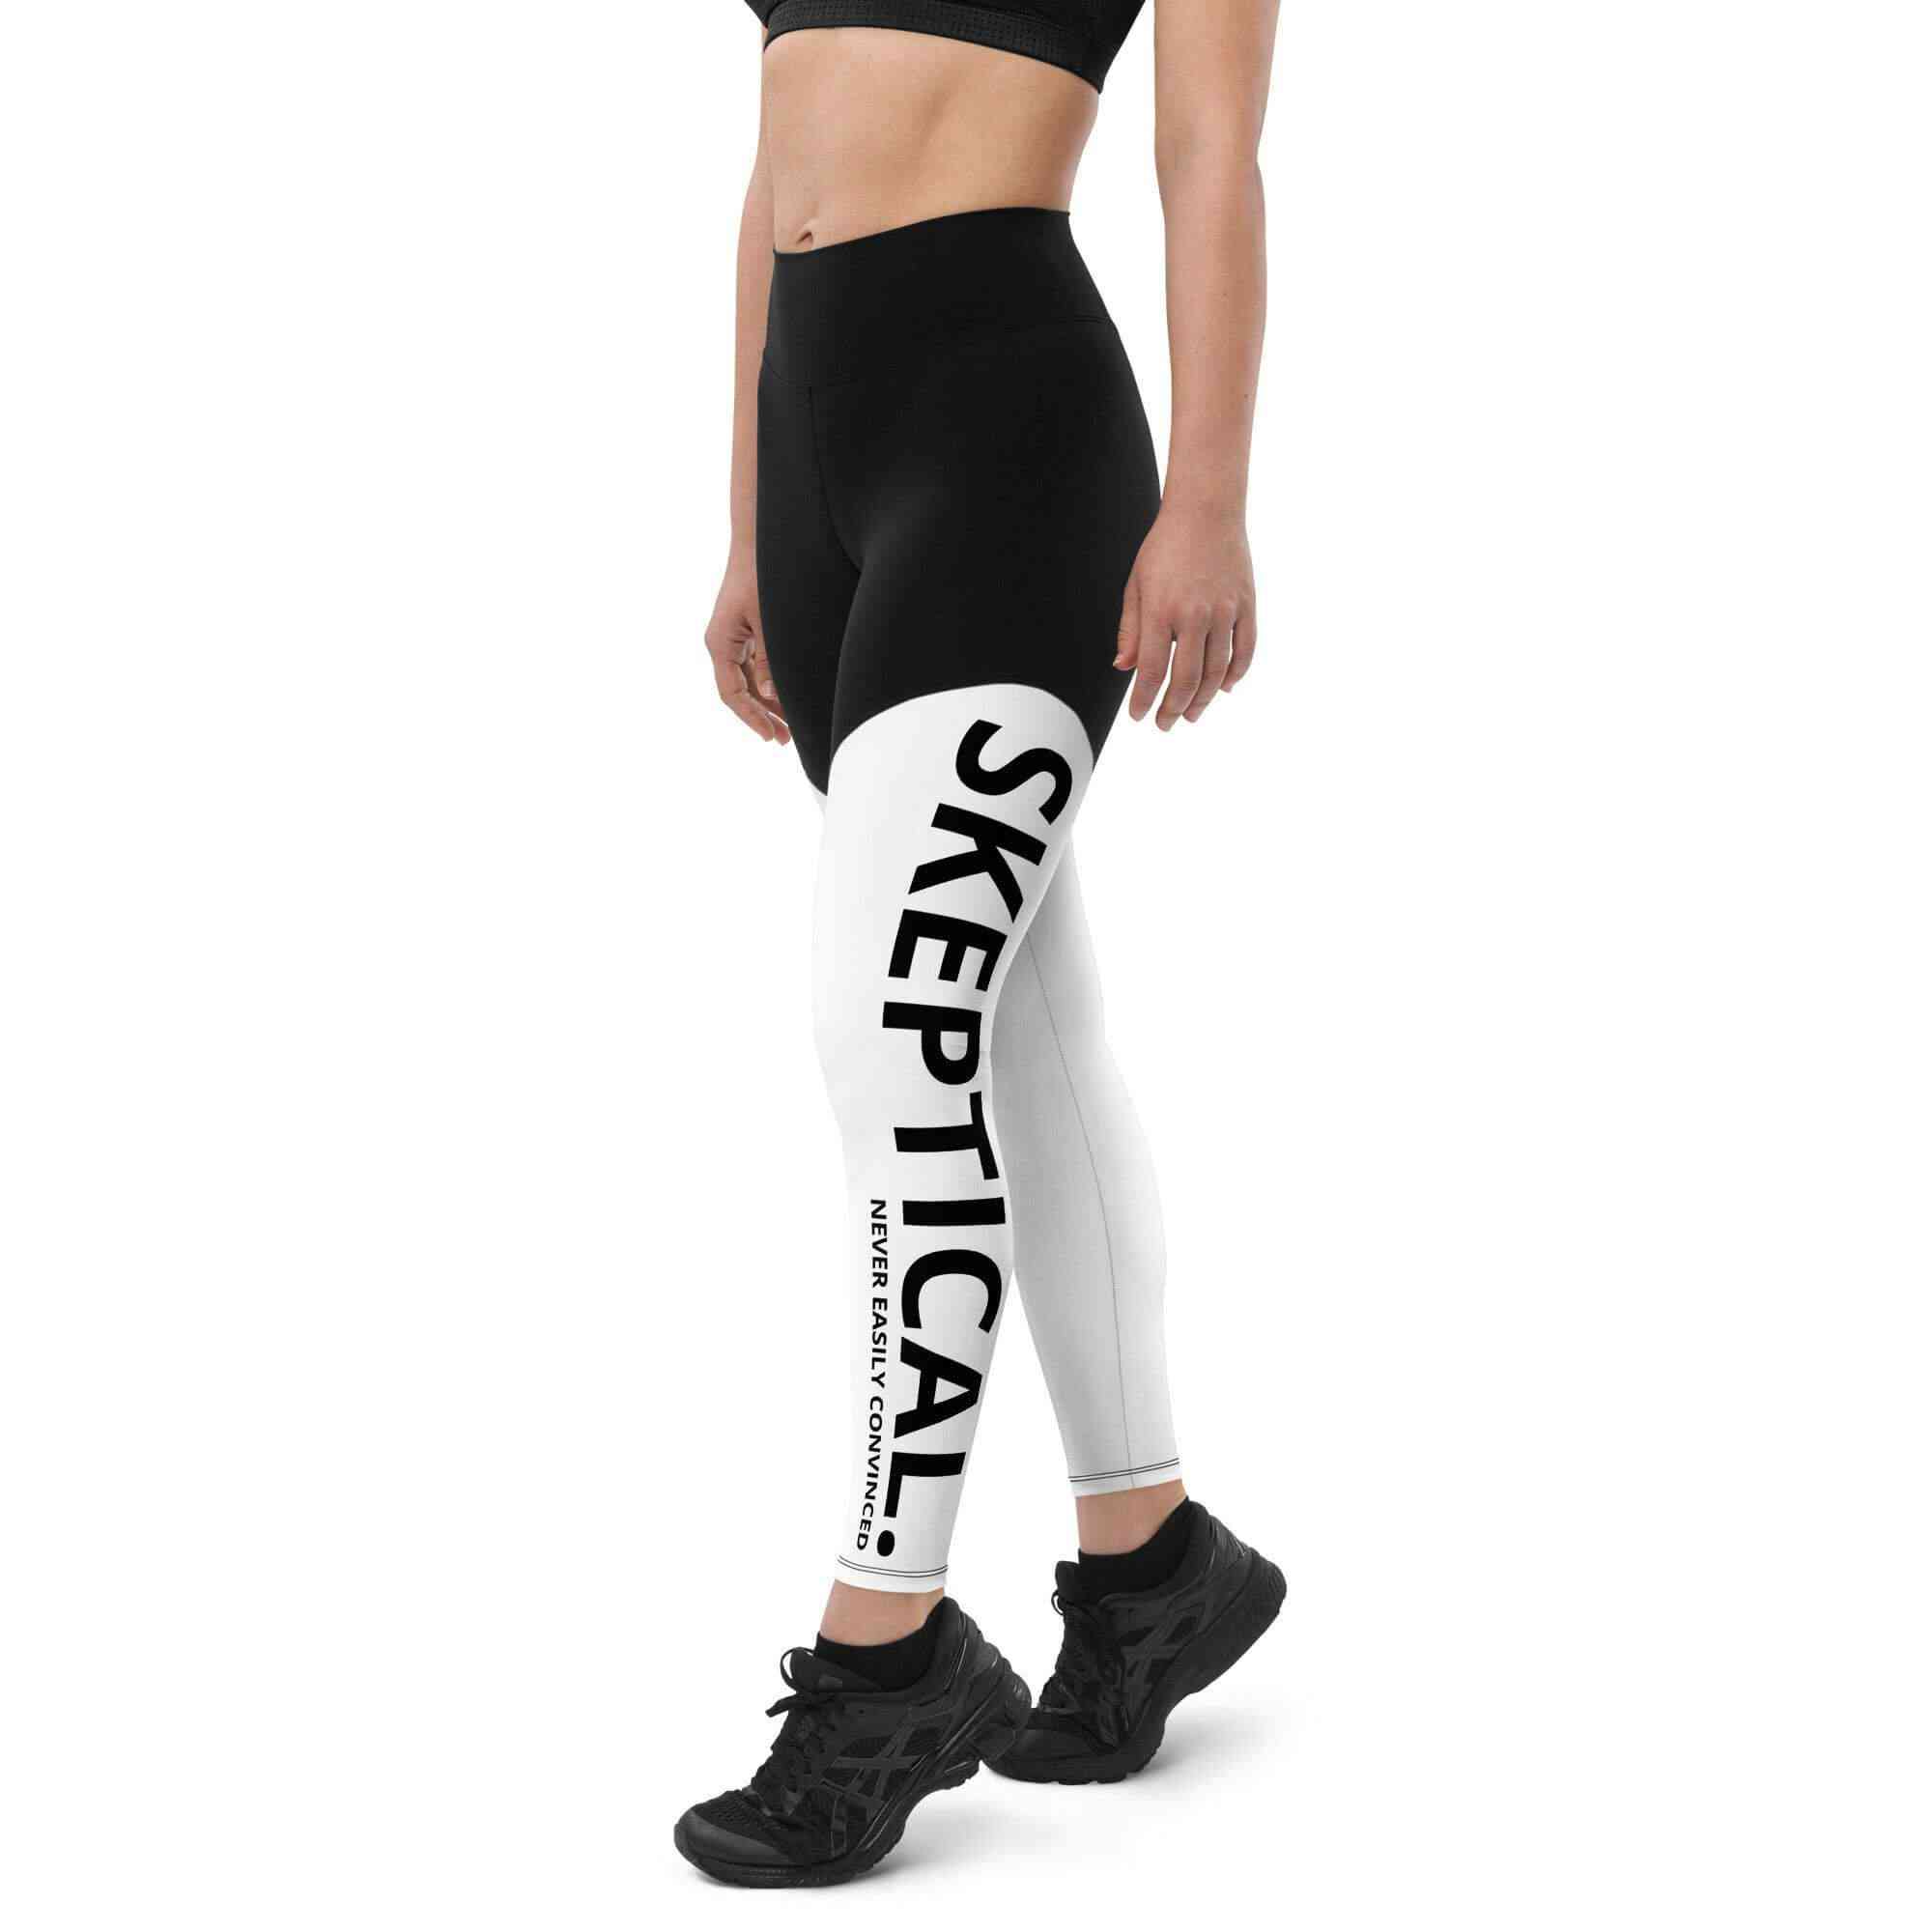 SKEPTICAL N.E.C Black And White Sports Leggings - SKEPTICAL BRANDS